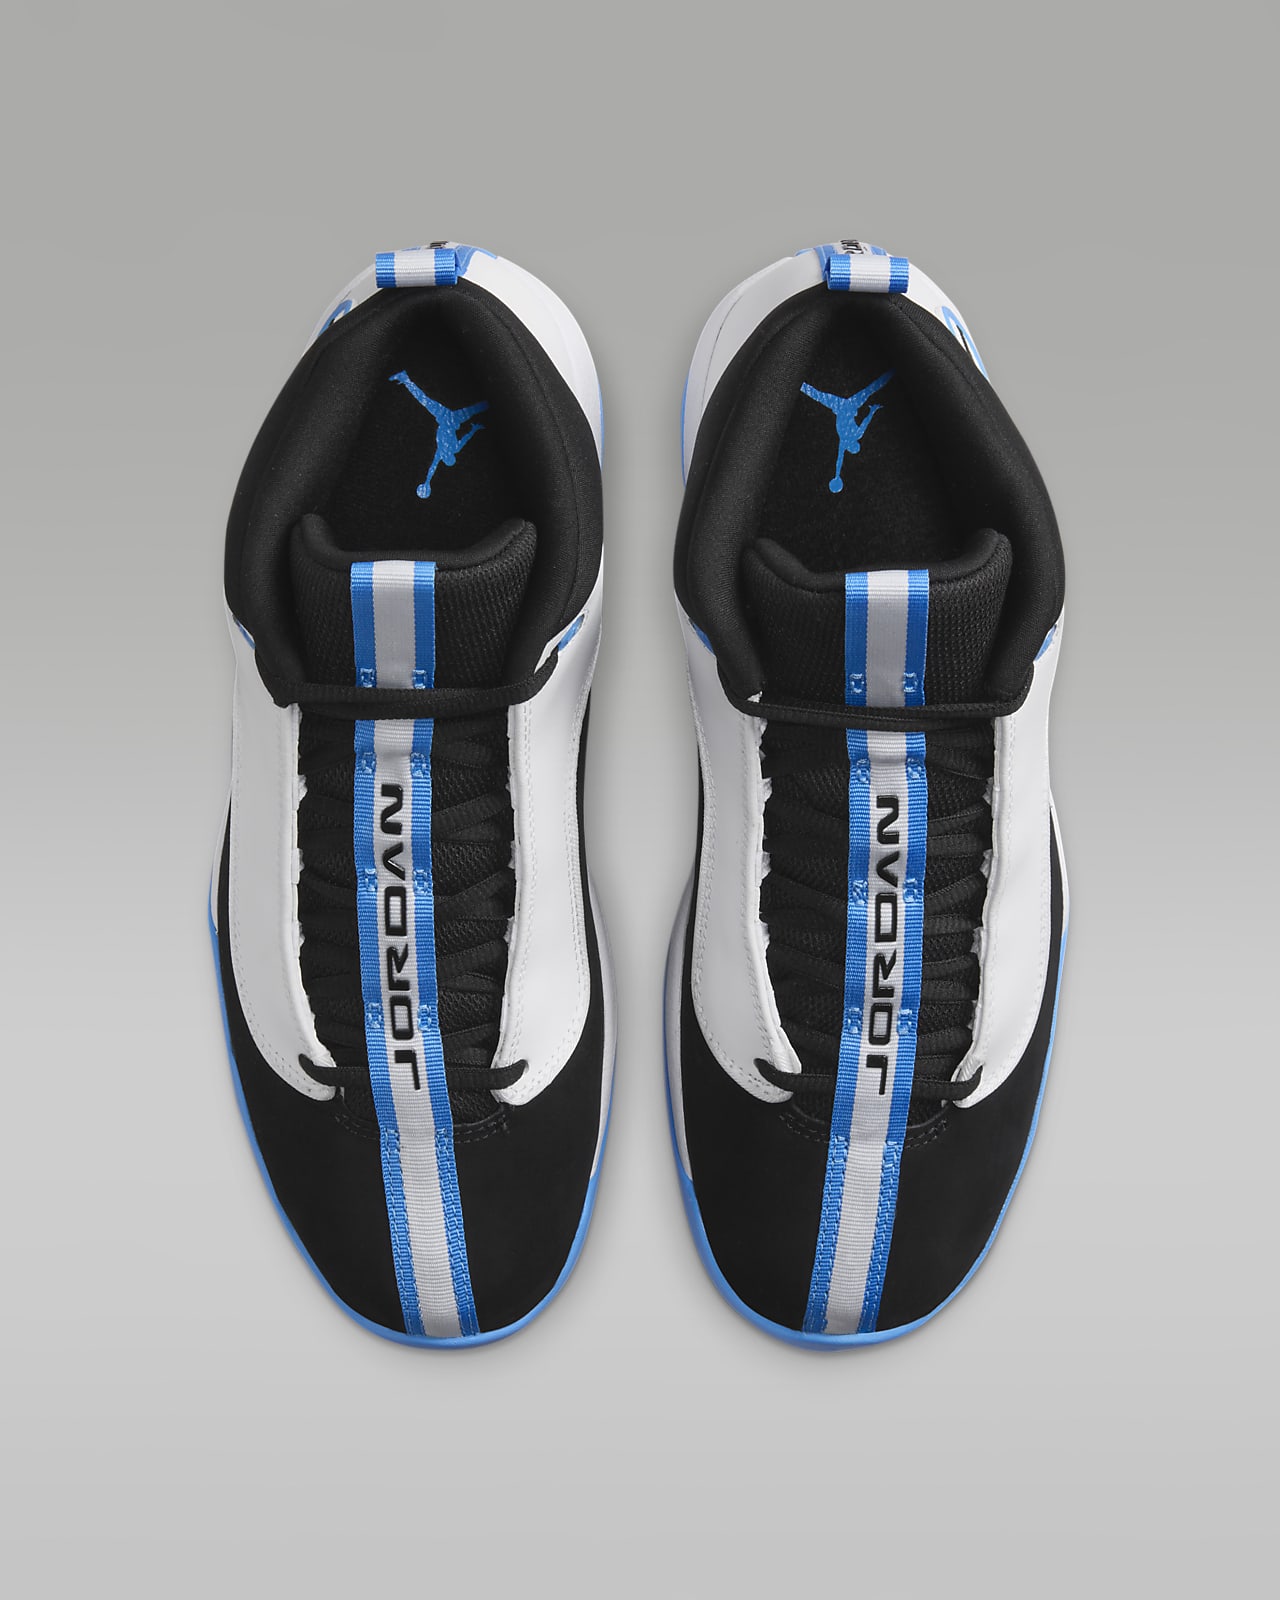 Men's Air Jordan Jumpman Pro Basketball Shoes